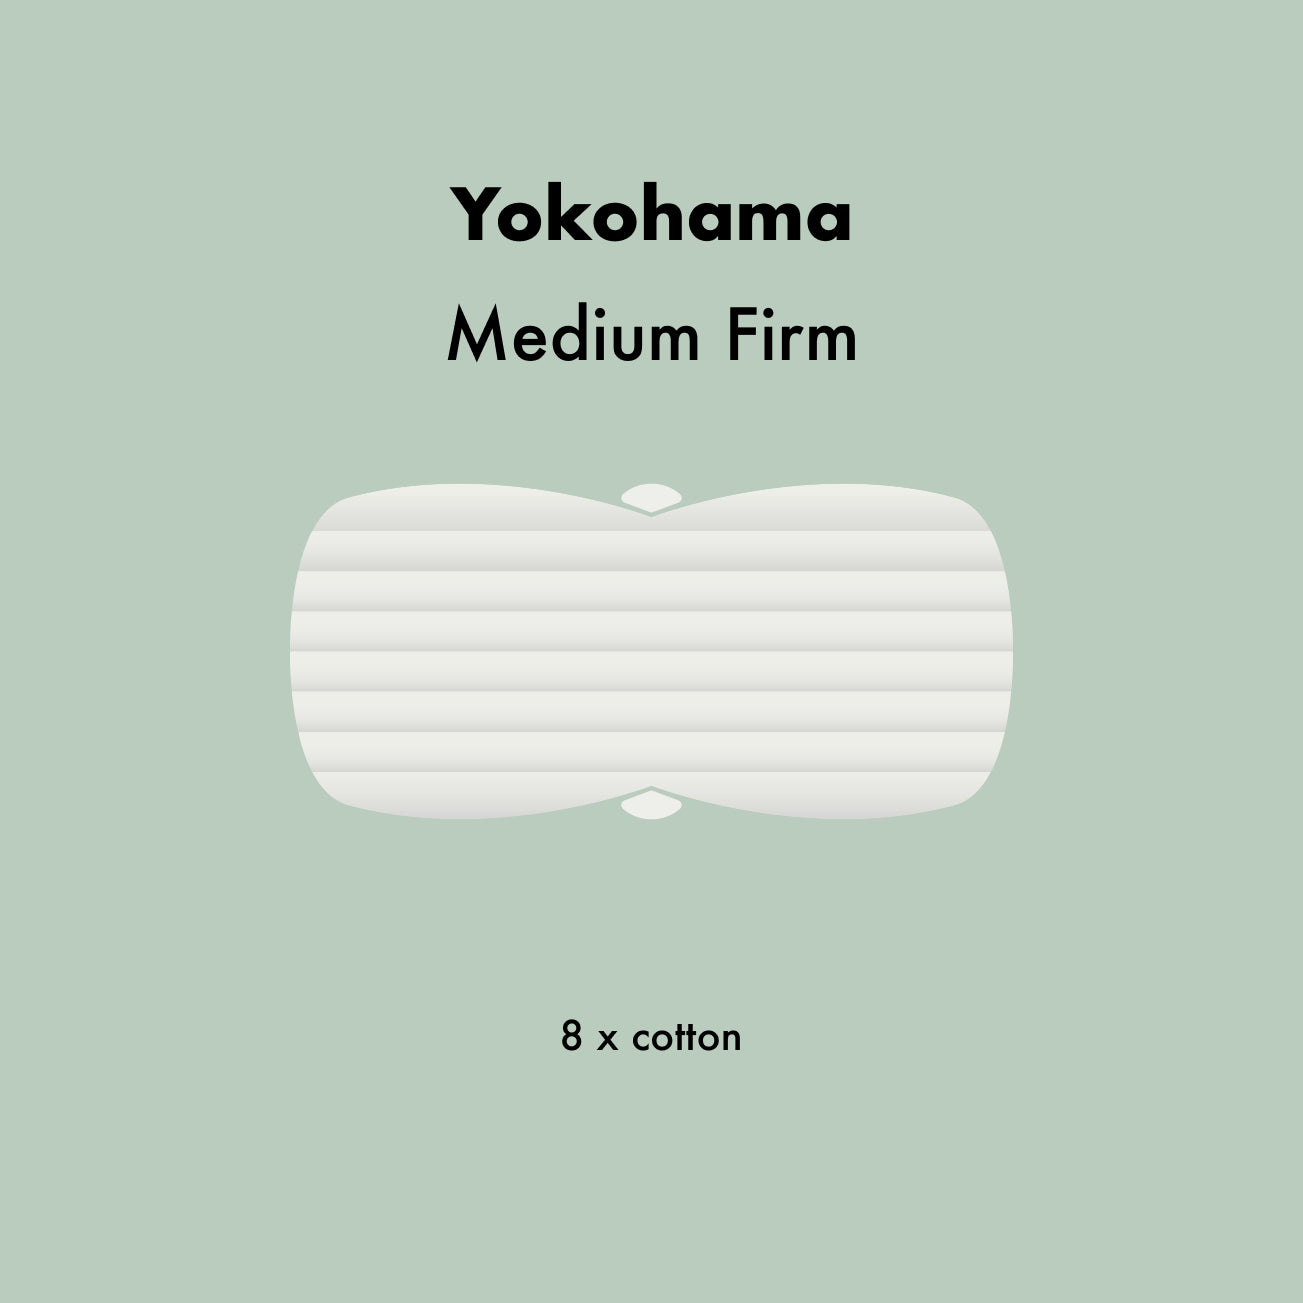 Yokohama Futon